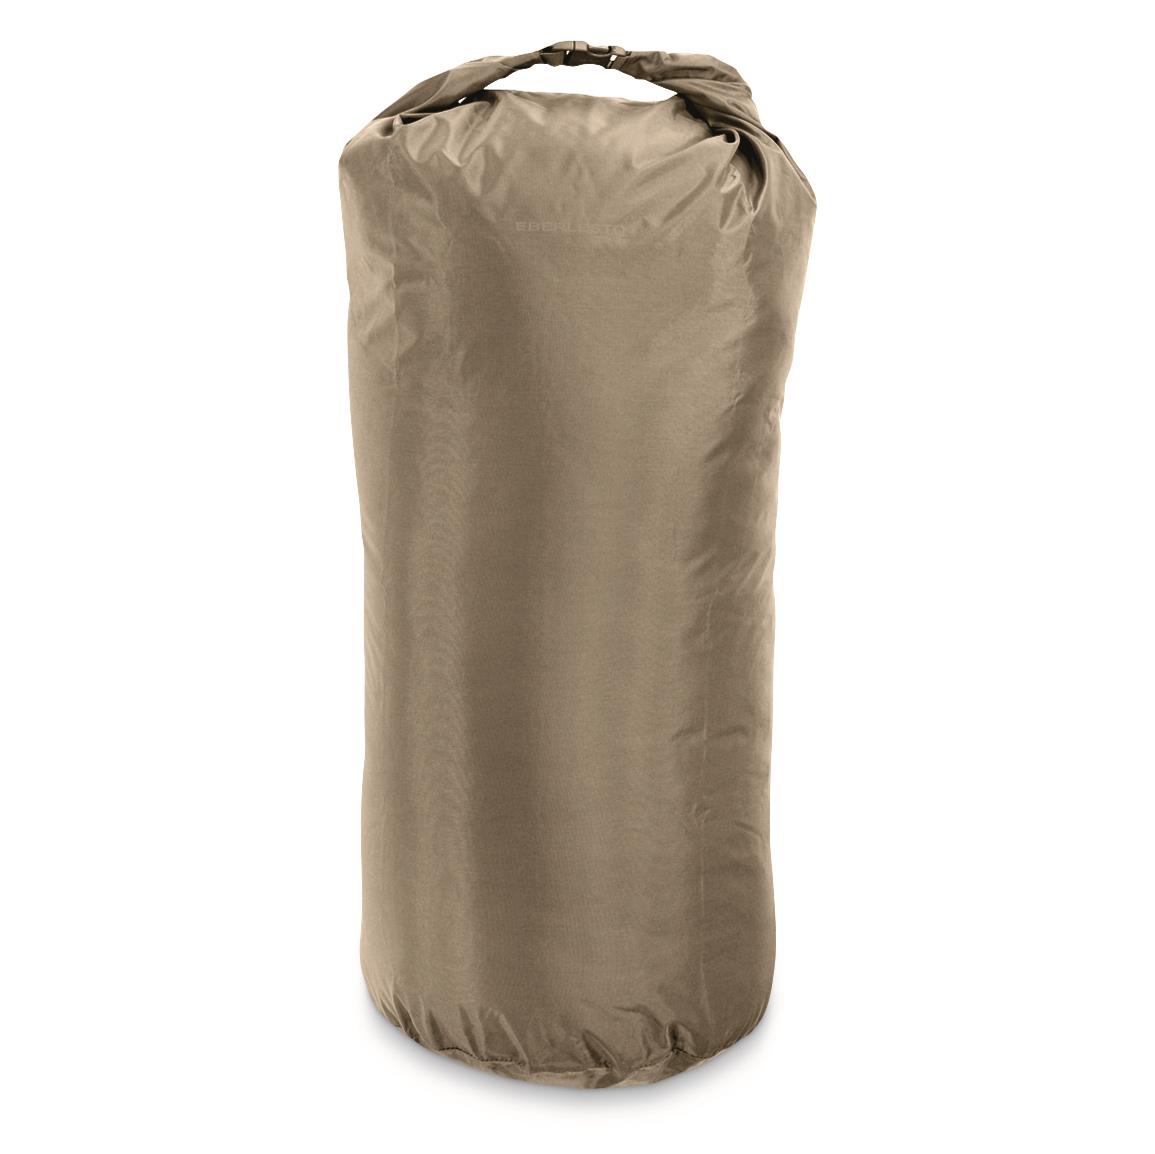 Eberlestock J-Type Zip-on Dry Bag, 65L, Dry Earth